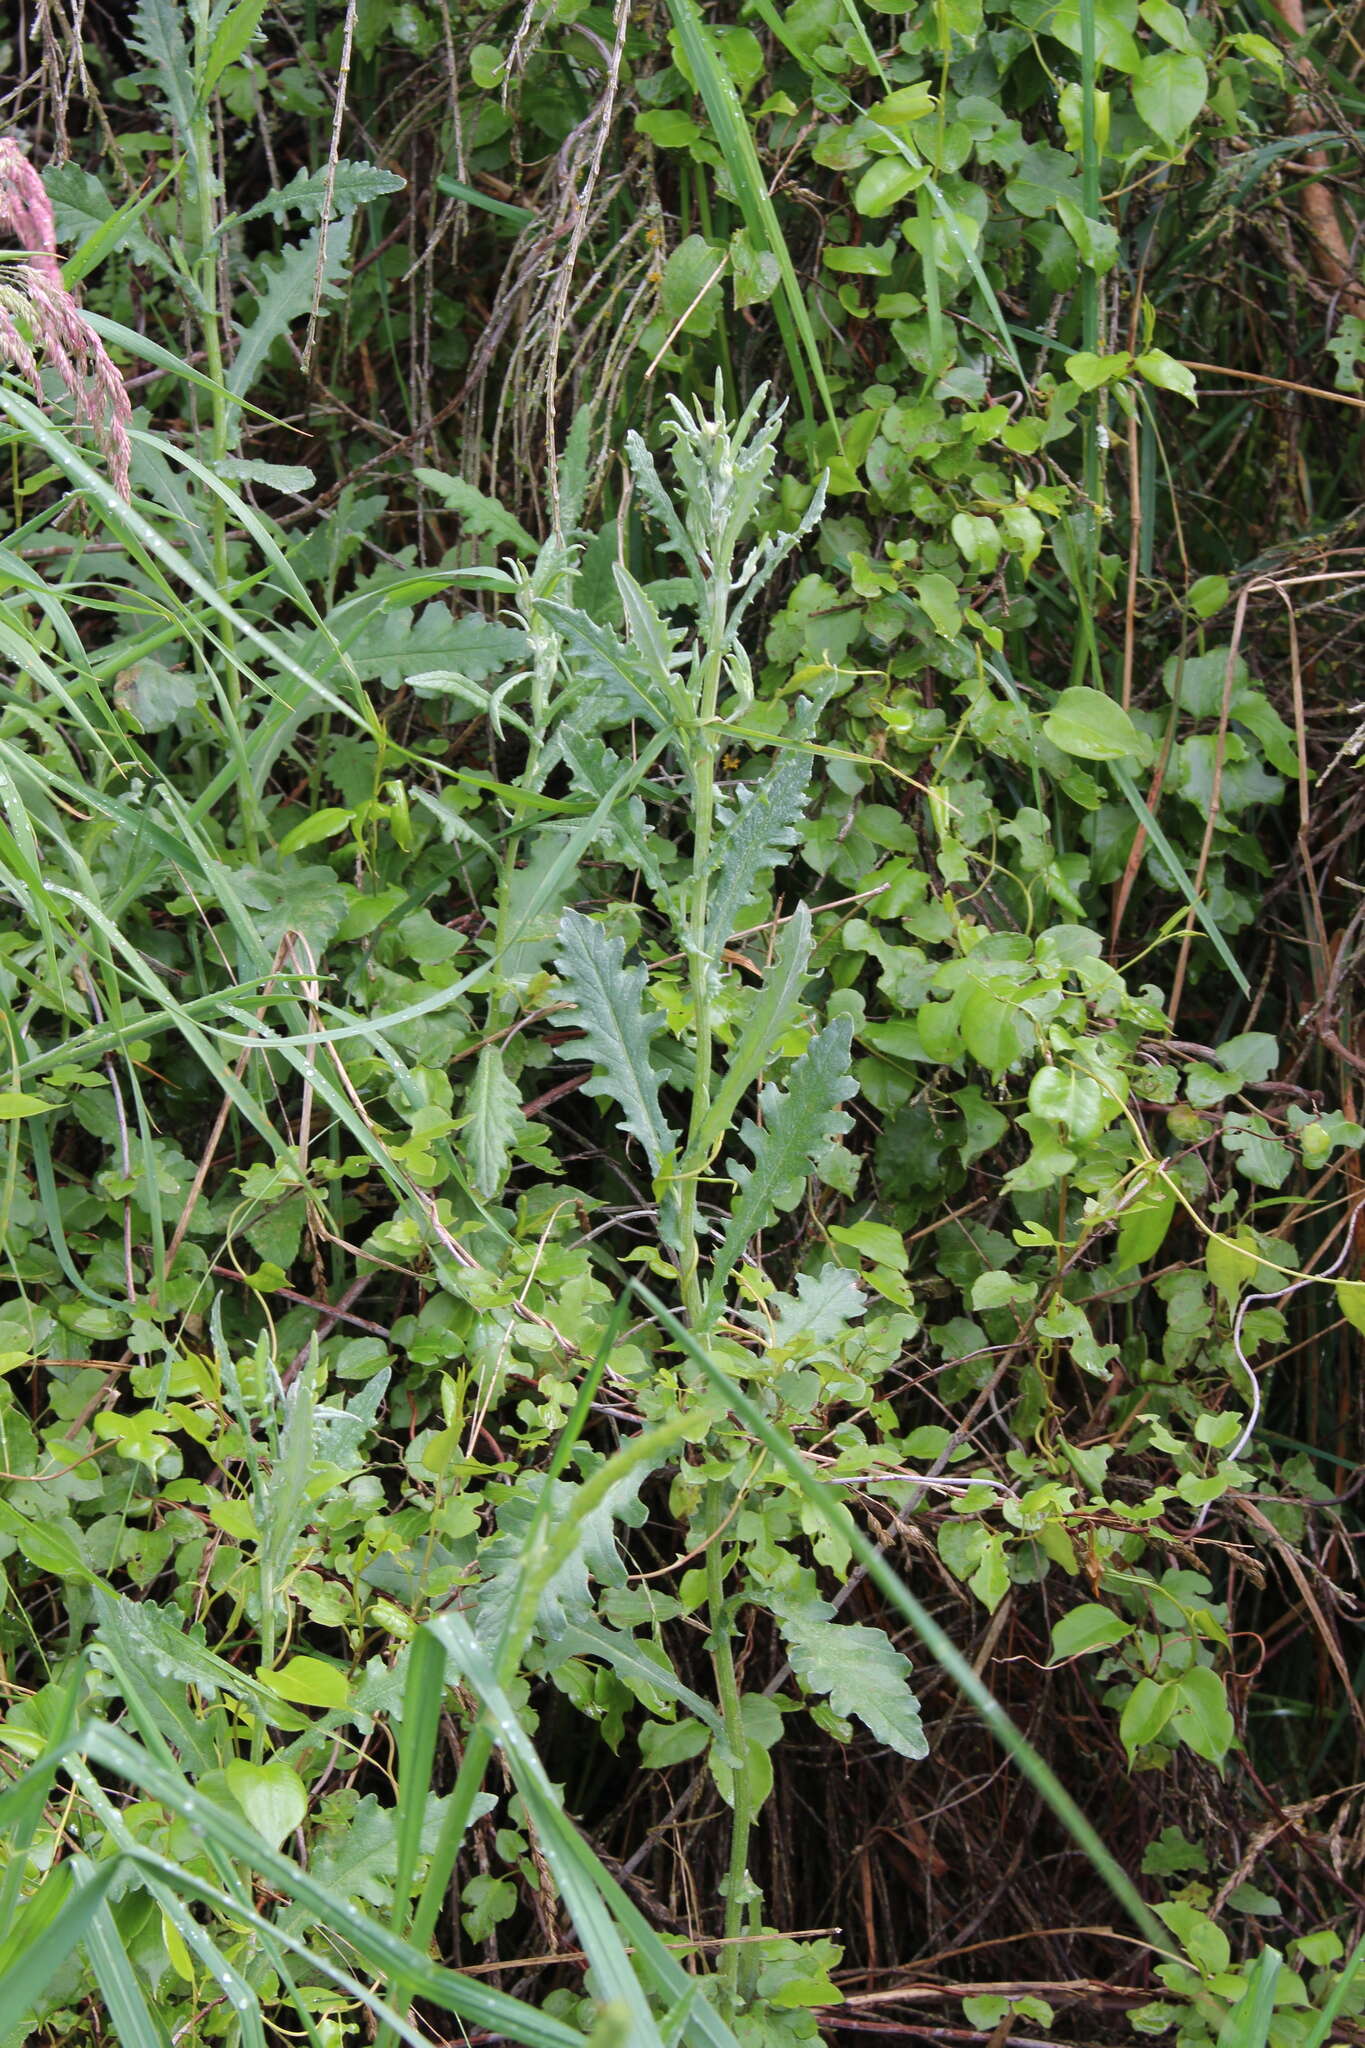 Sivun Senecio glomeratus subsp. glomeratus kuva